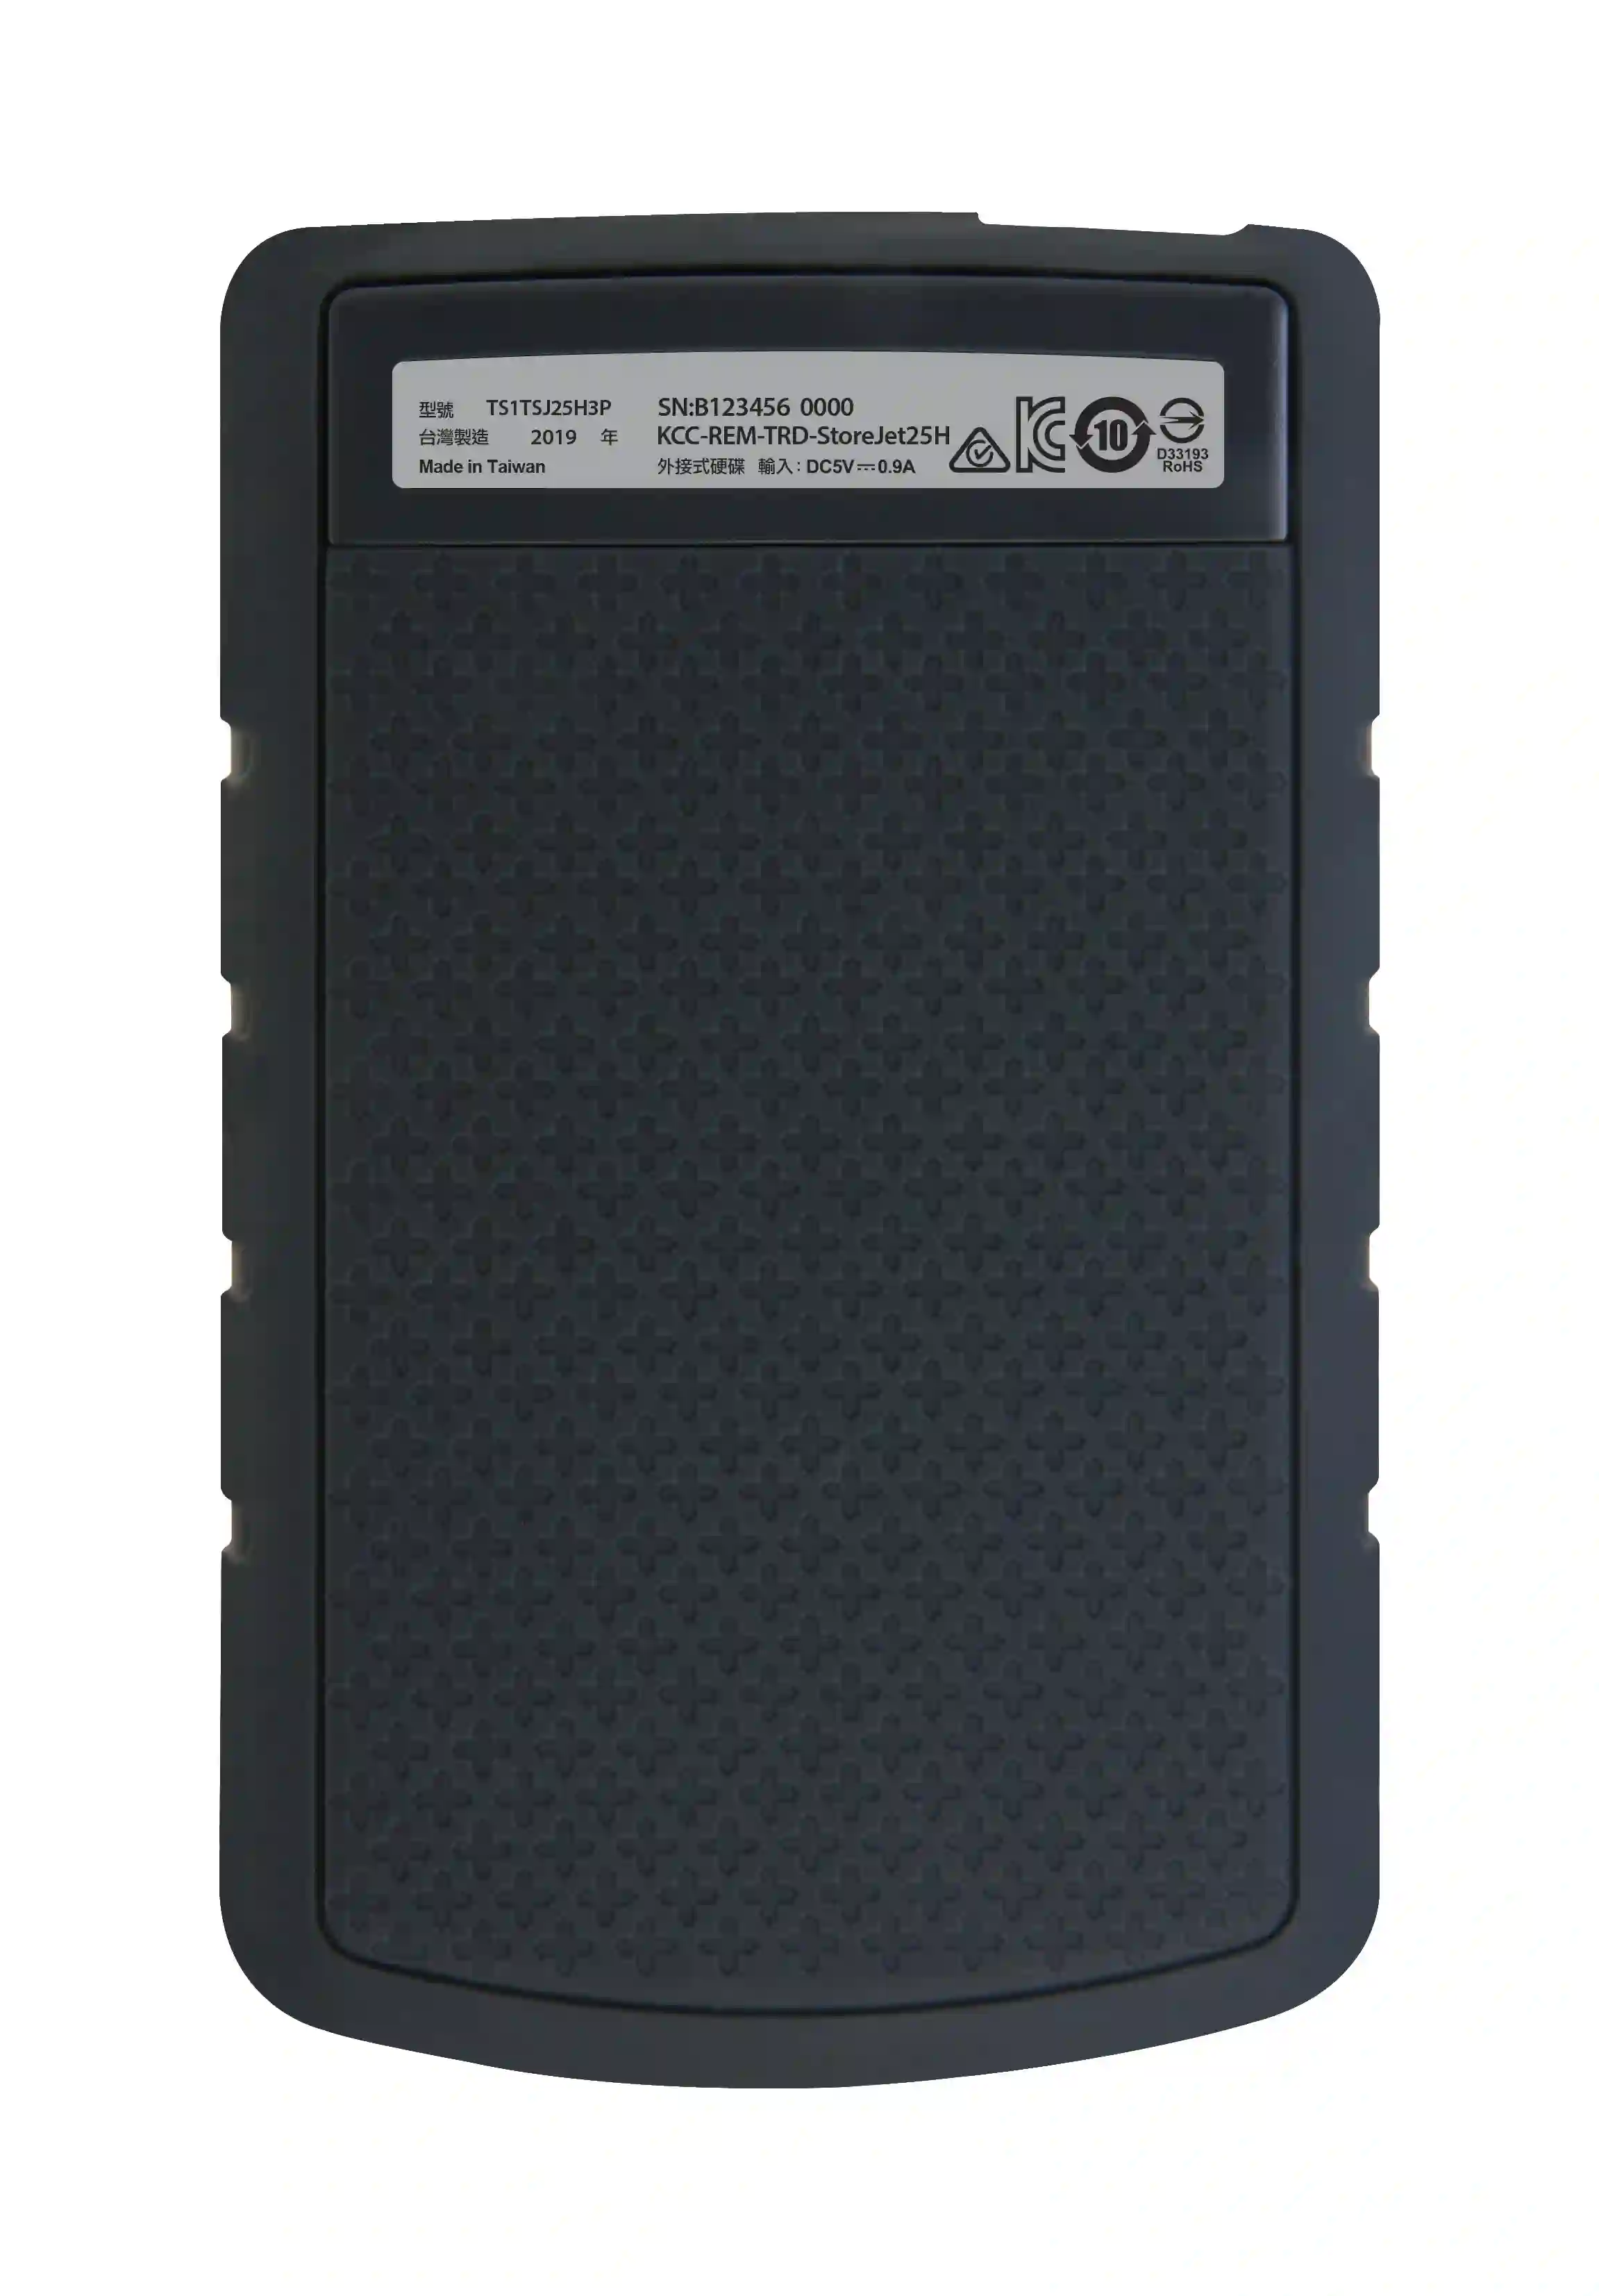 Внешний HDD диск TRANSCEND StoreJet 25H 1TB (TS1TSJ25H3P)